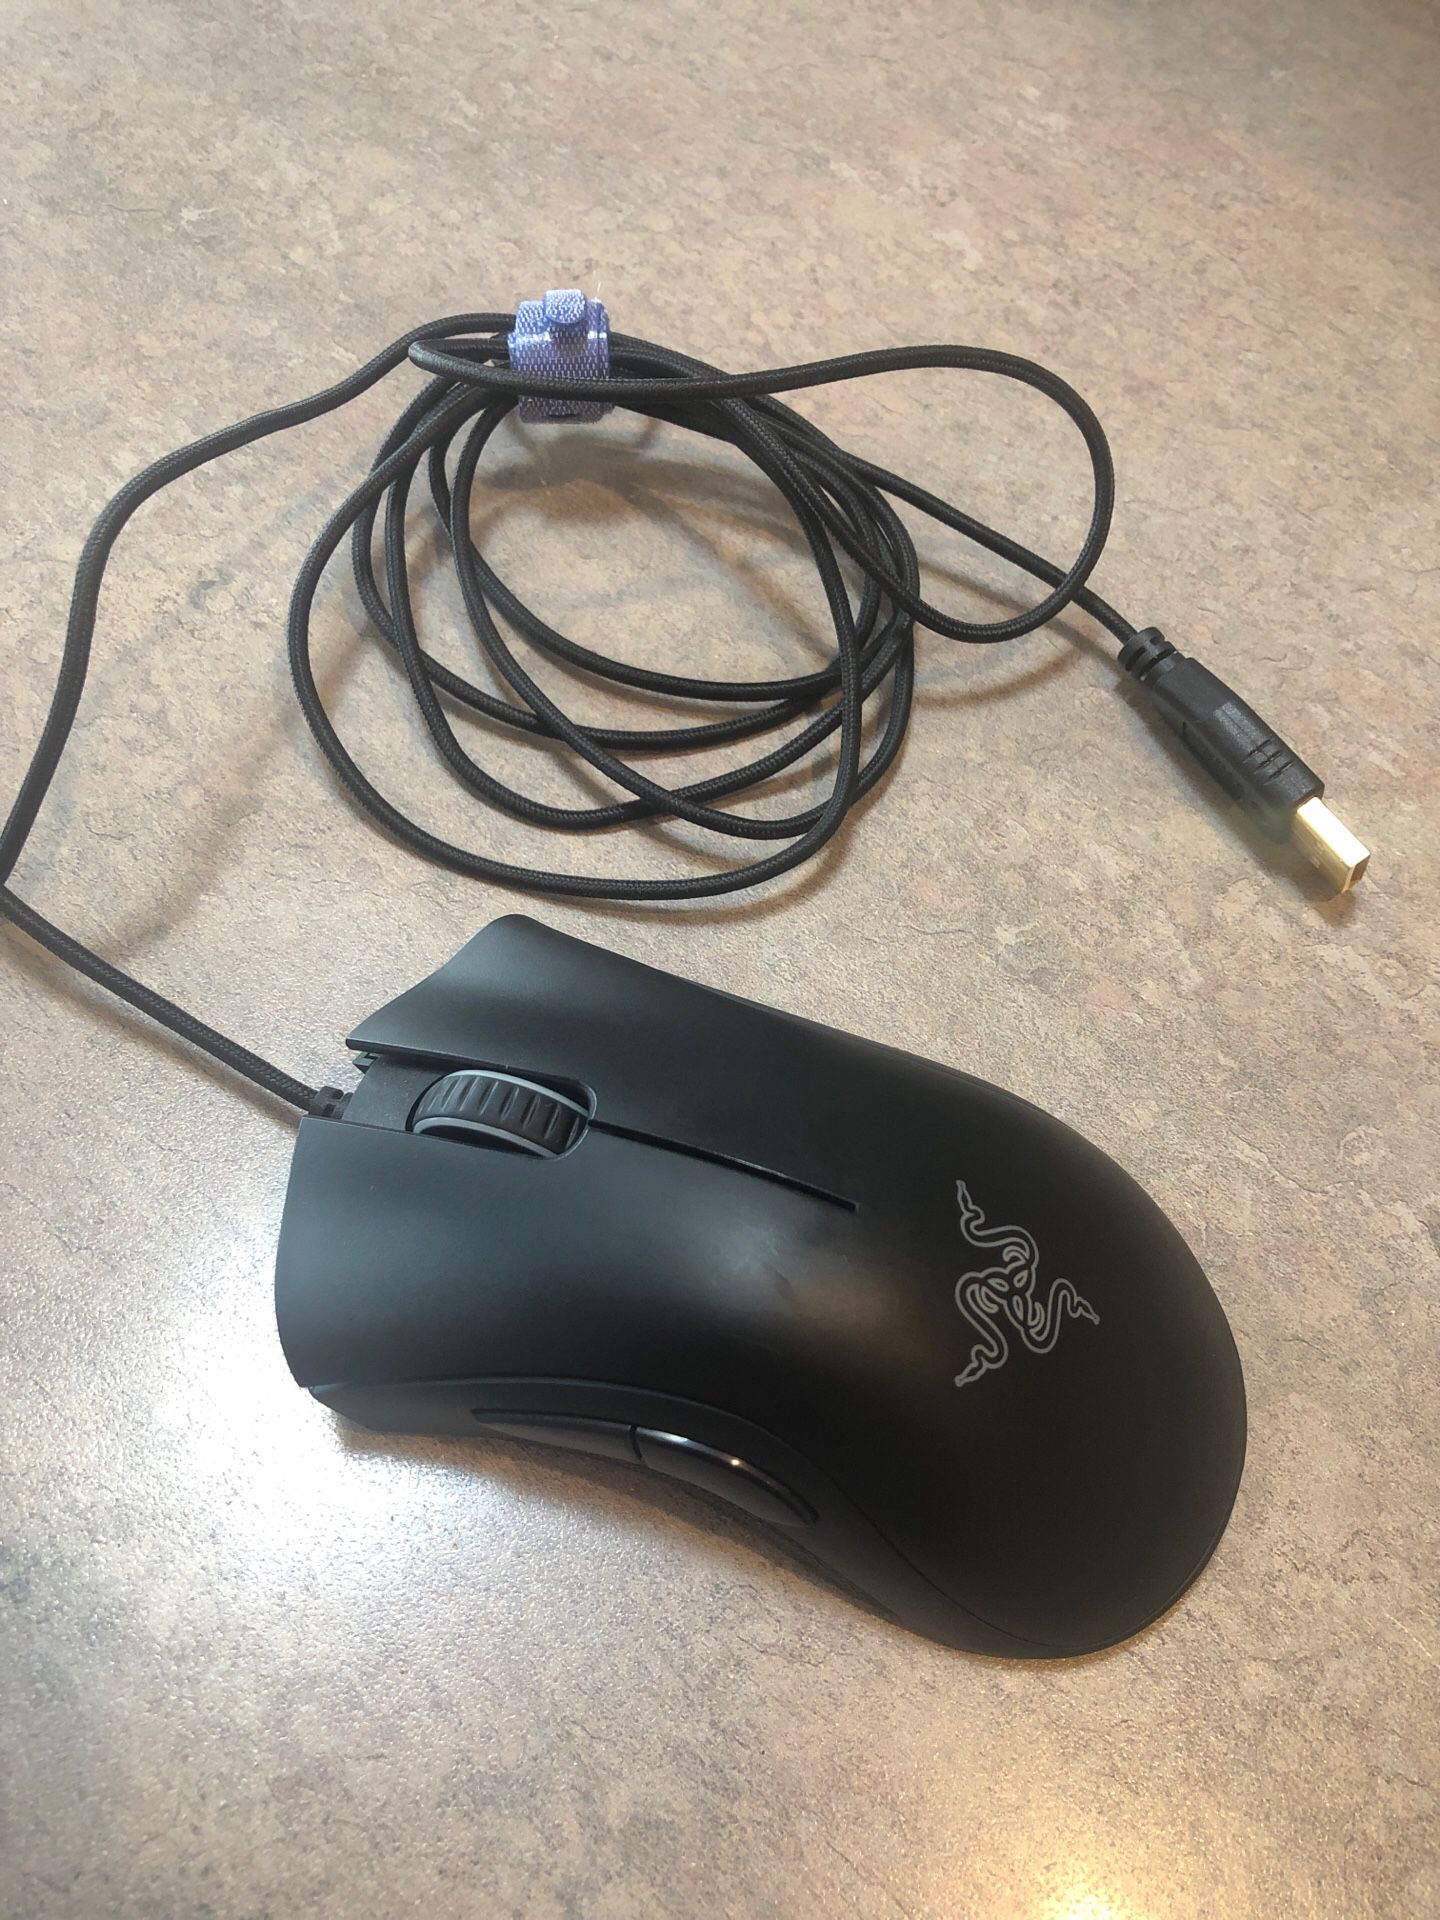 Deathadder chroma gaming mouse